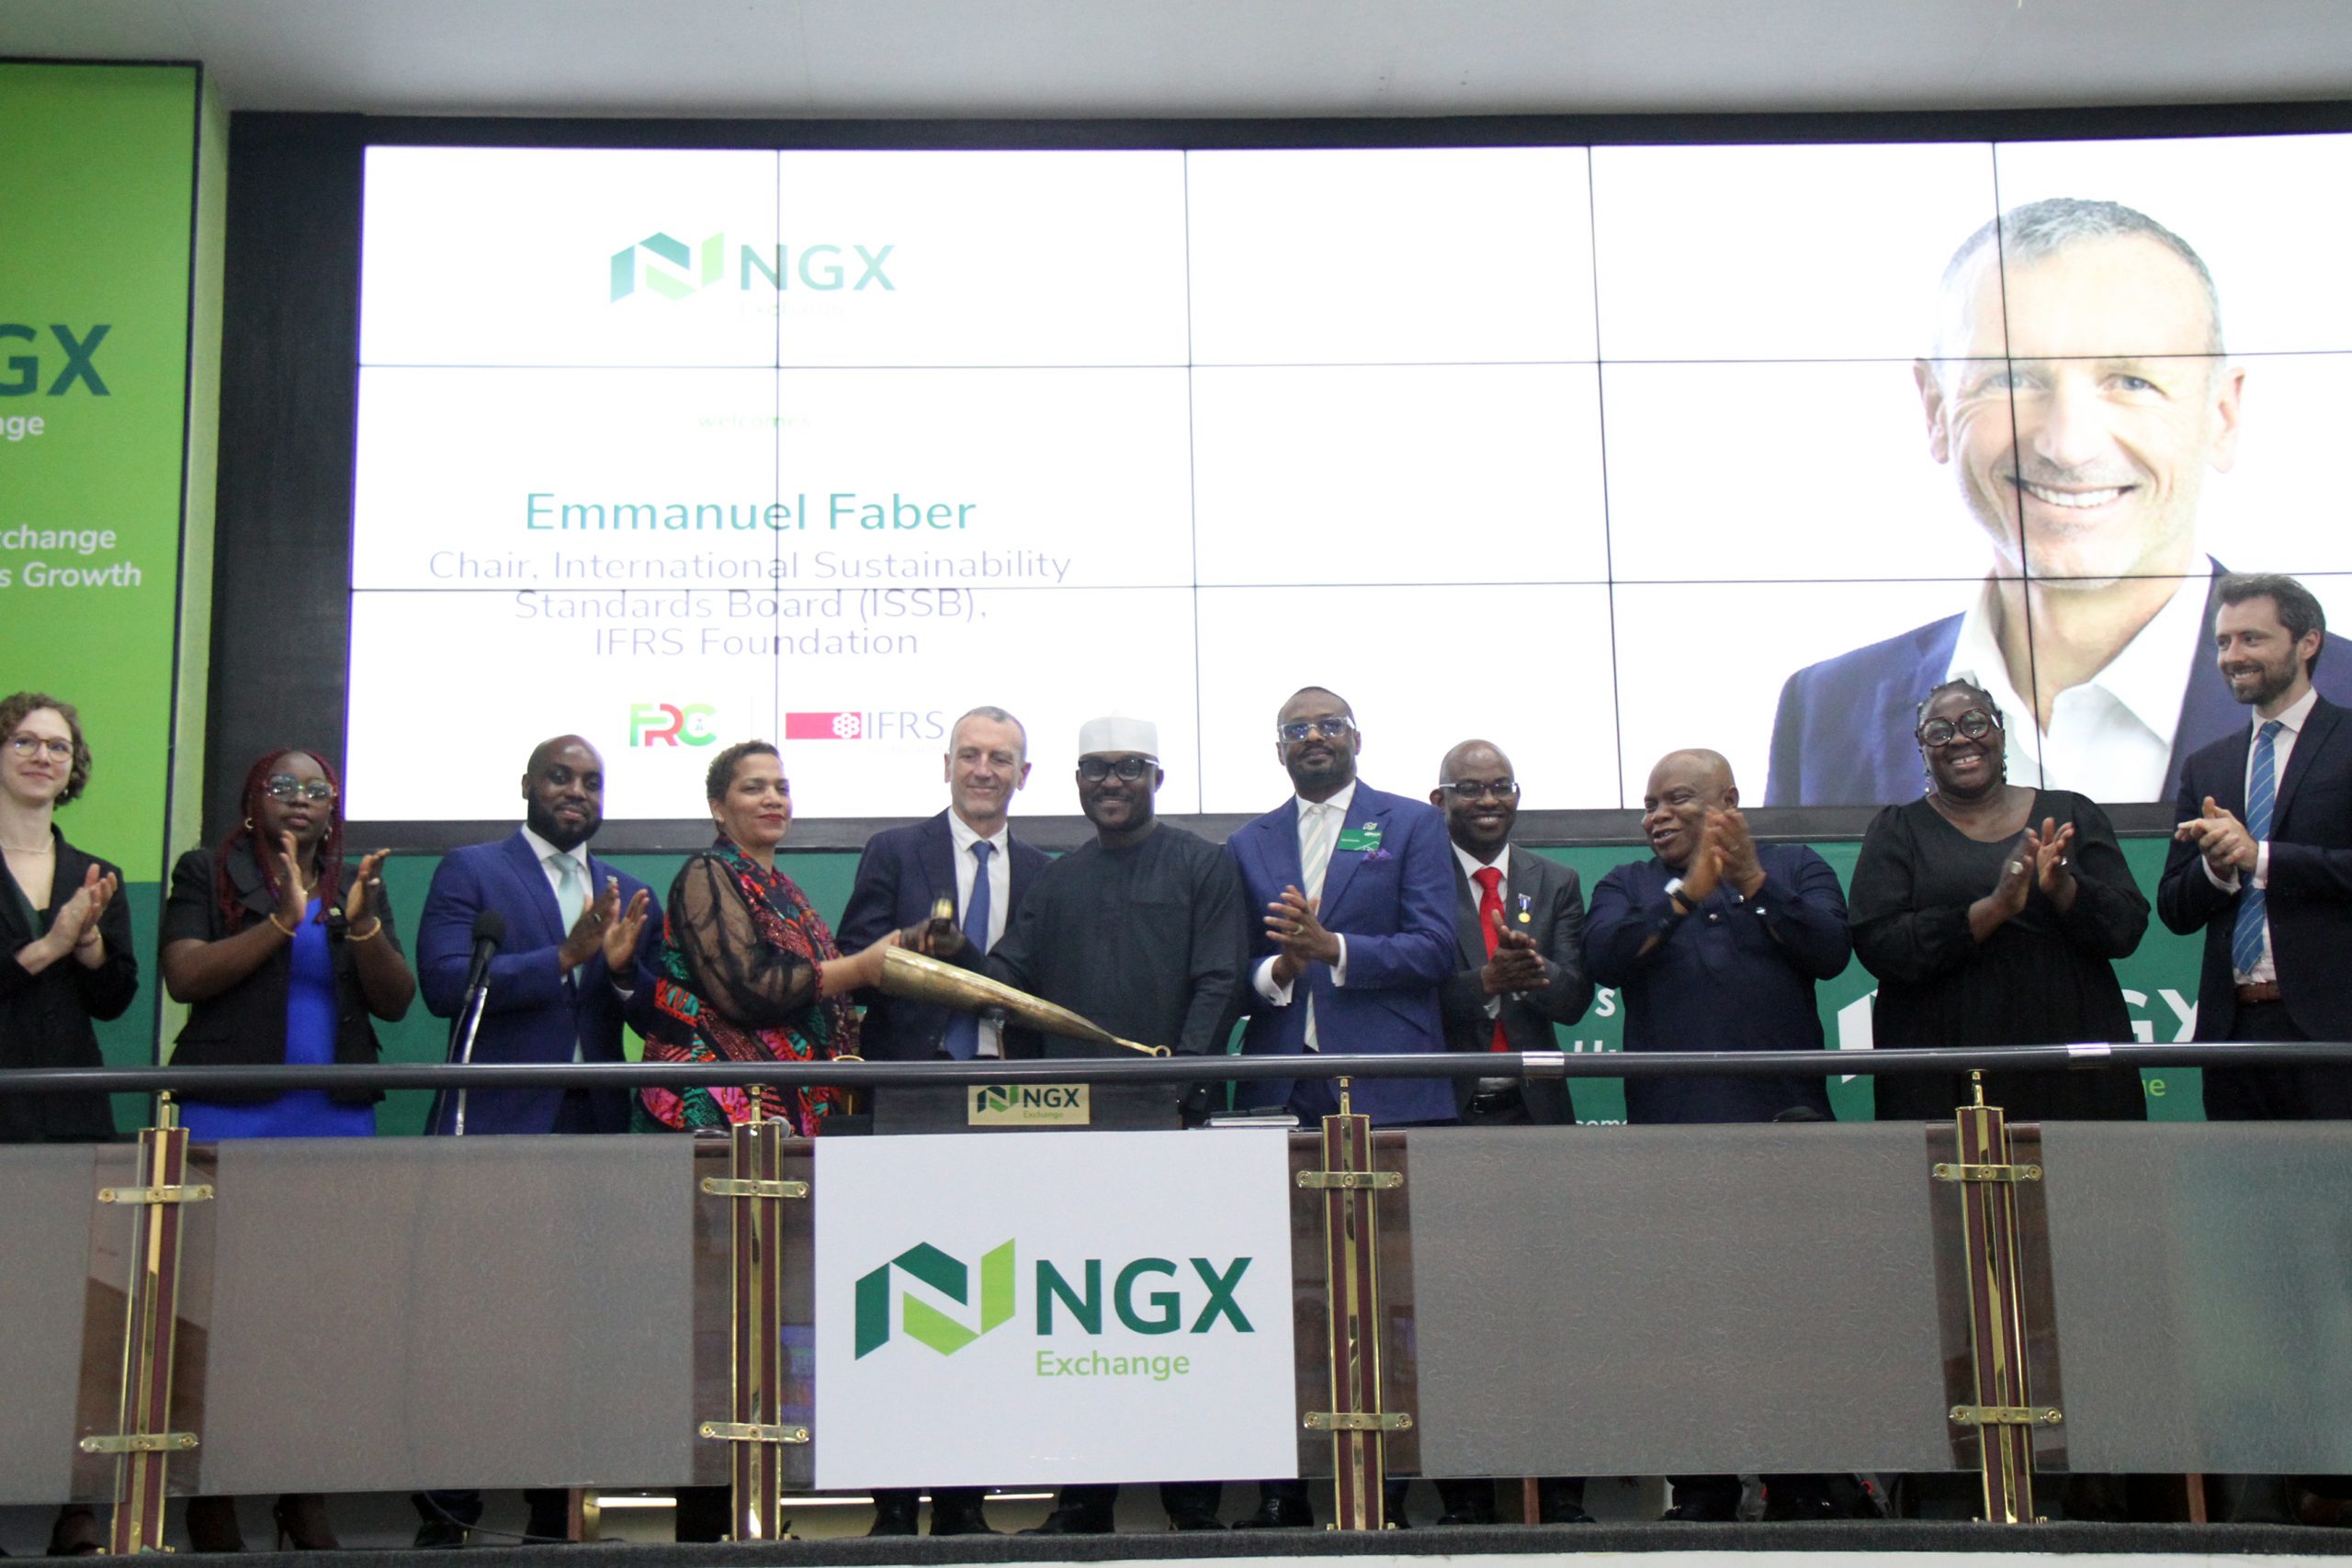 NGX Group welcomes Emmanuel Faber